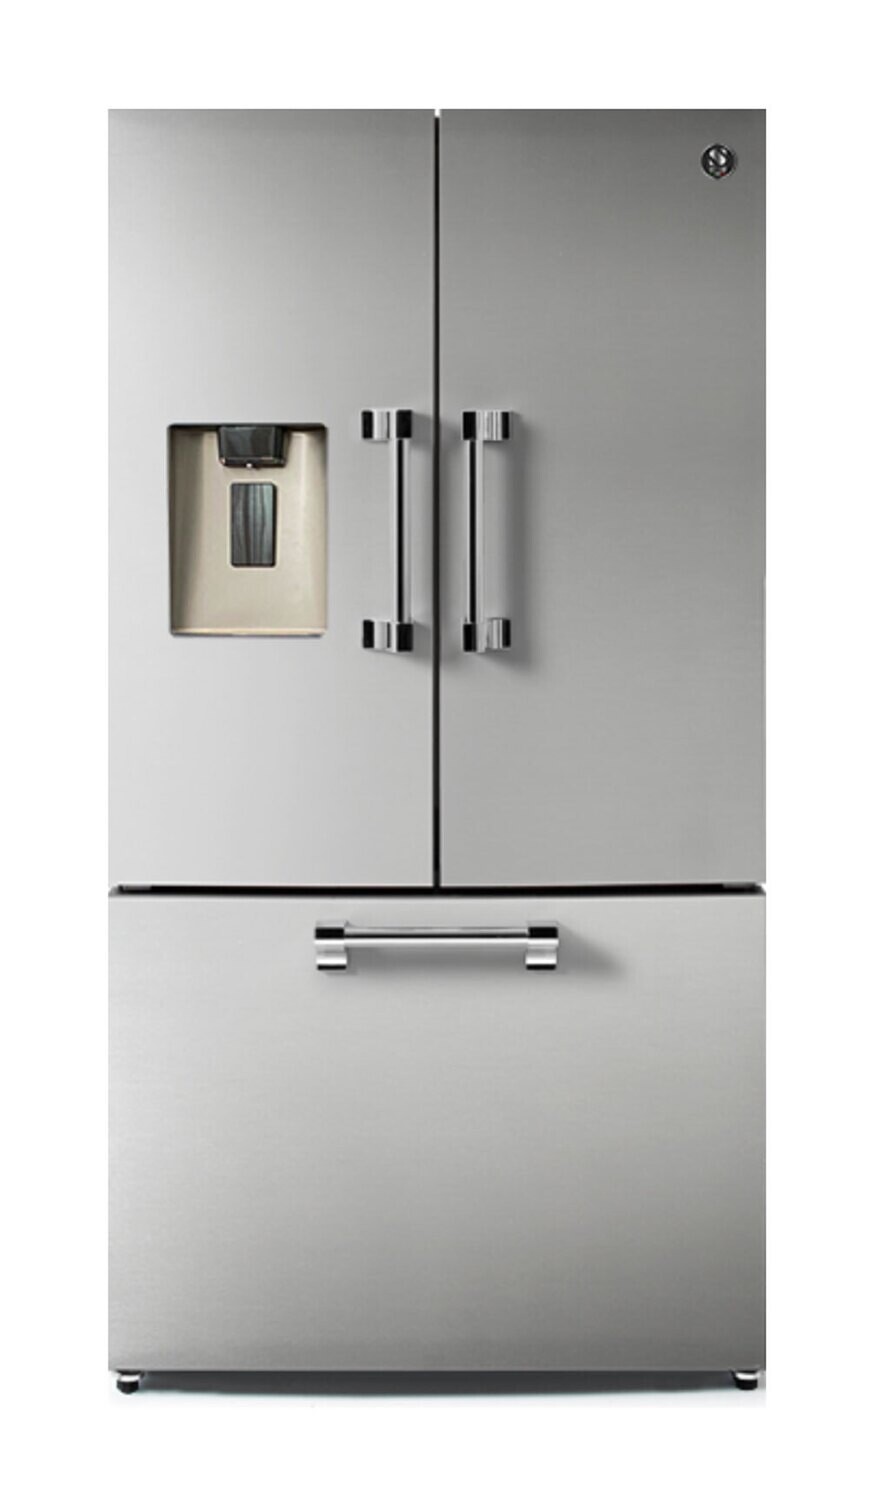 Steel Cucine Ascot 90 French Door Refrigerator, Colour: Stainless Steel